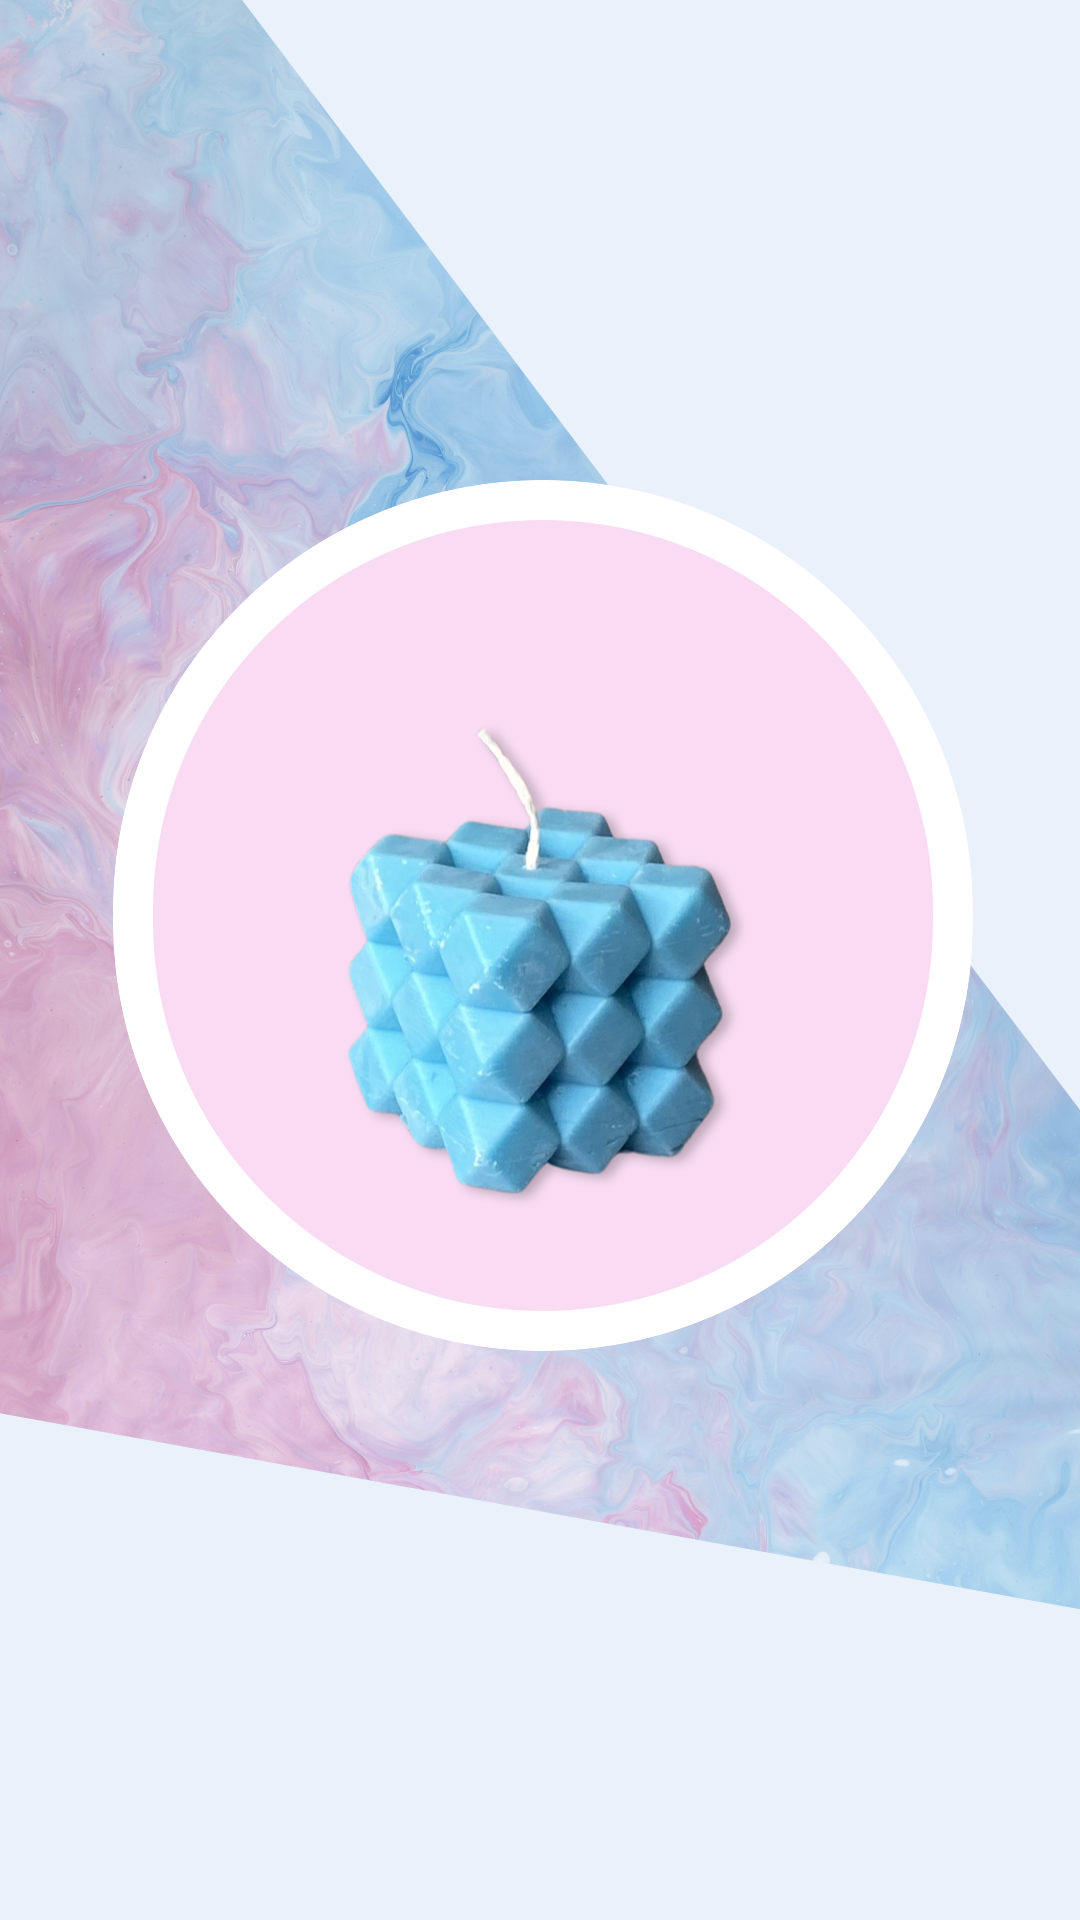 Rubik's cube Candle